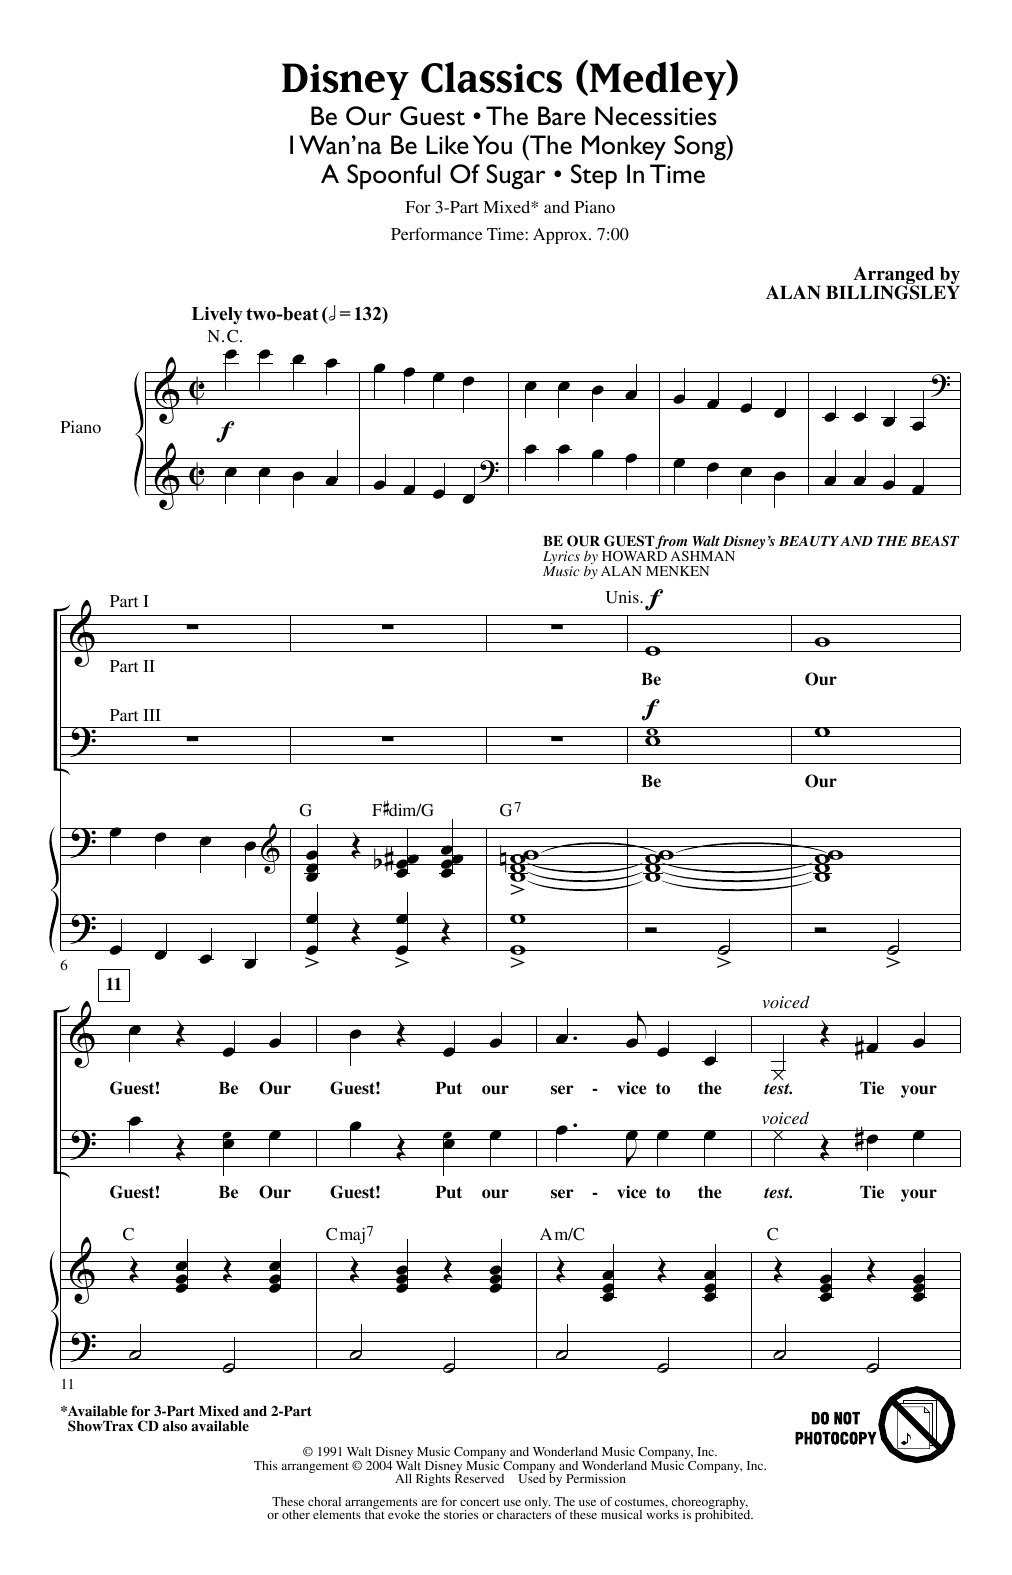 Alan Billingsley Disney Classics (Medley) Sheet Music Notes & Chords for 2-Part Choir - Download or Print PDF